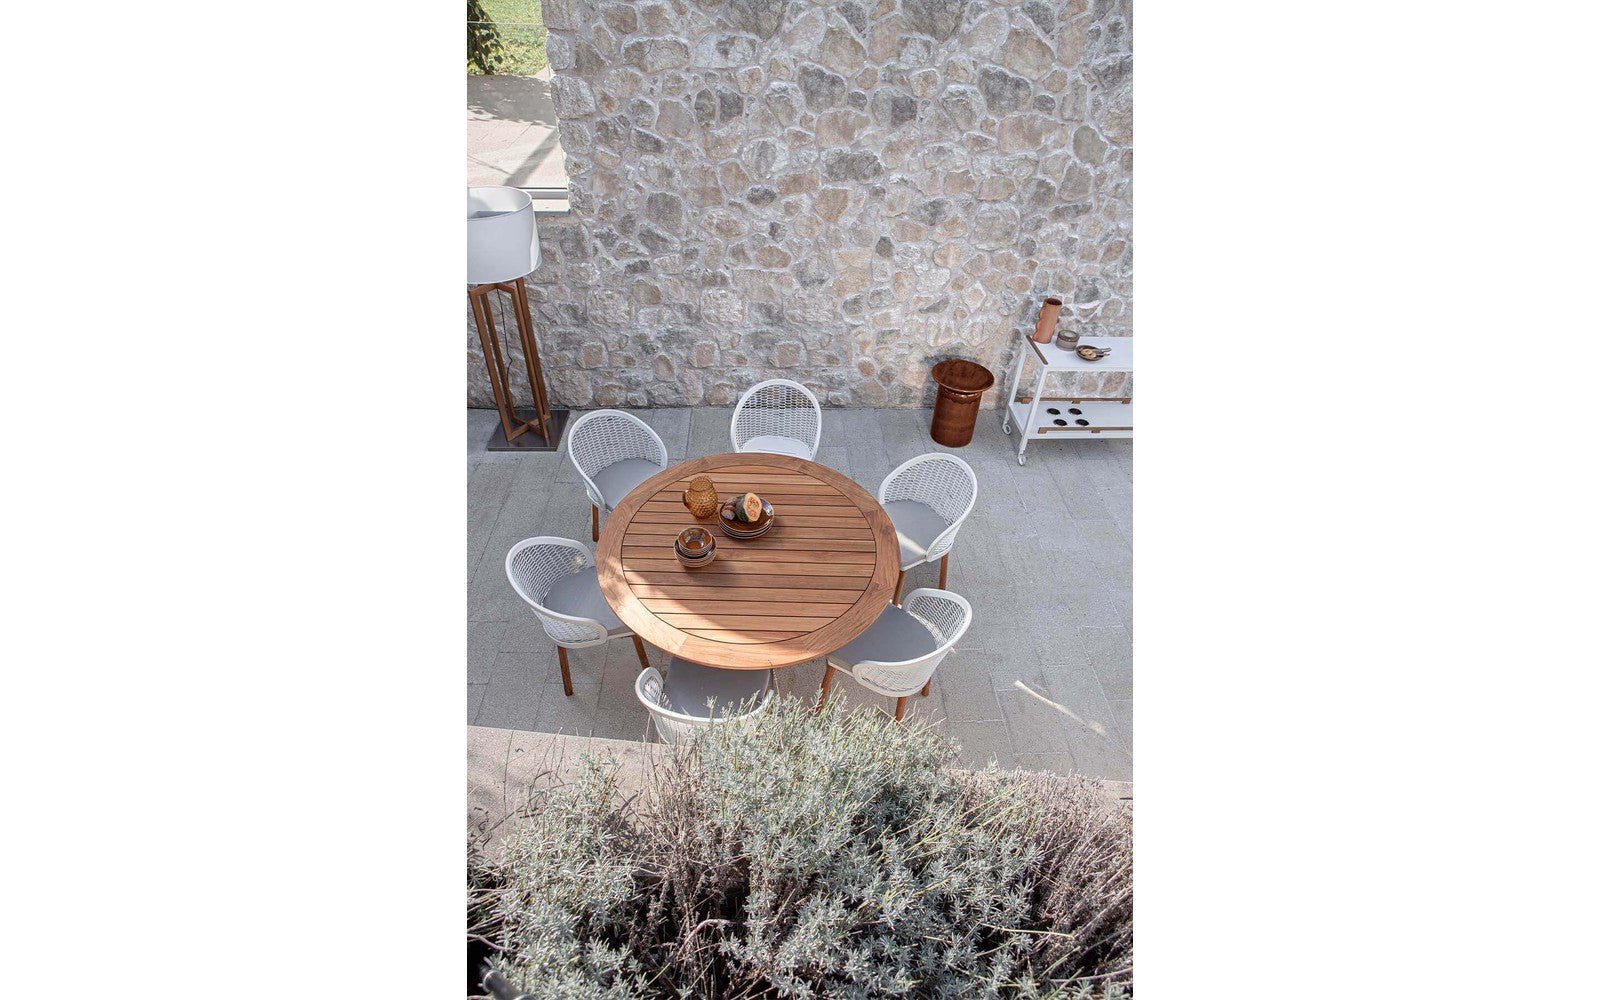 Desert Round Outdoor Table